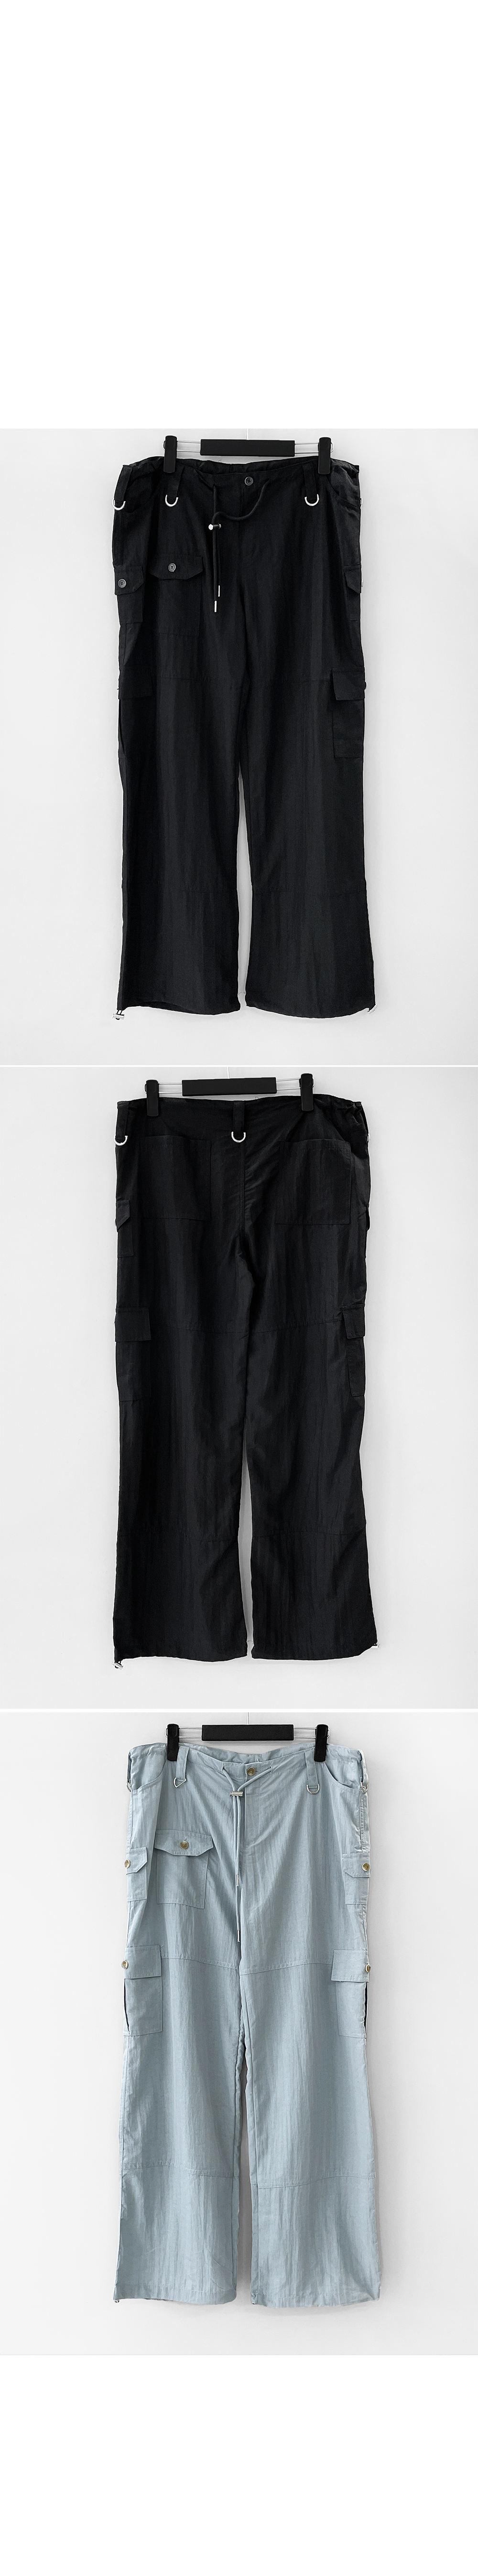 suspenders skirt/pants product image-S1L13